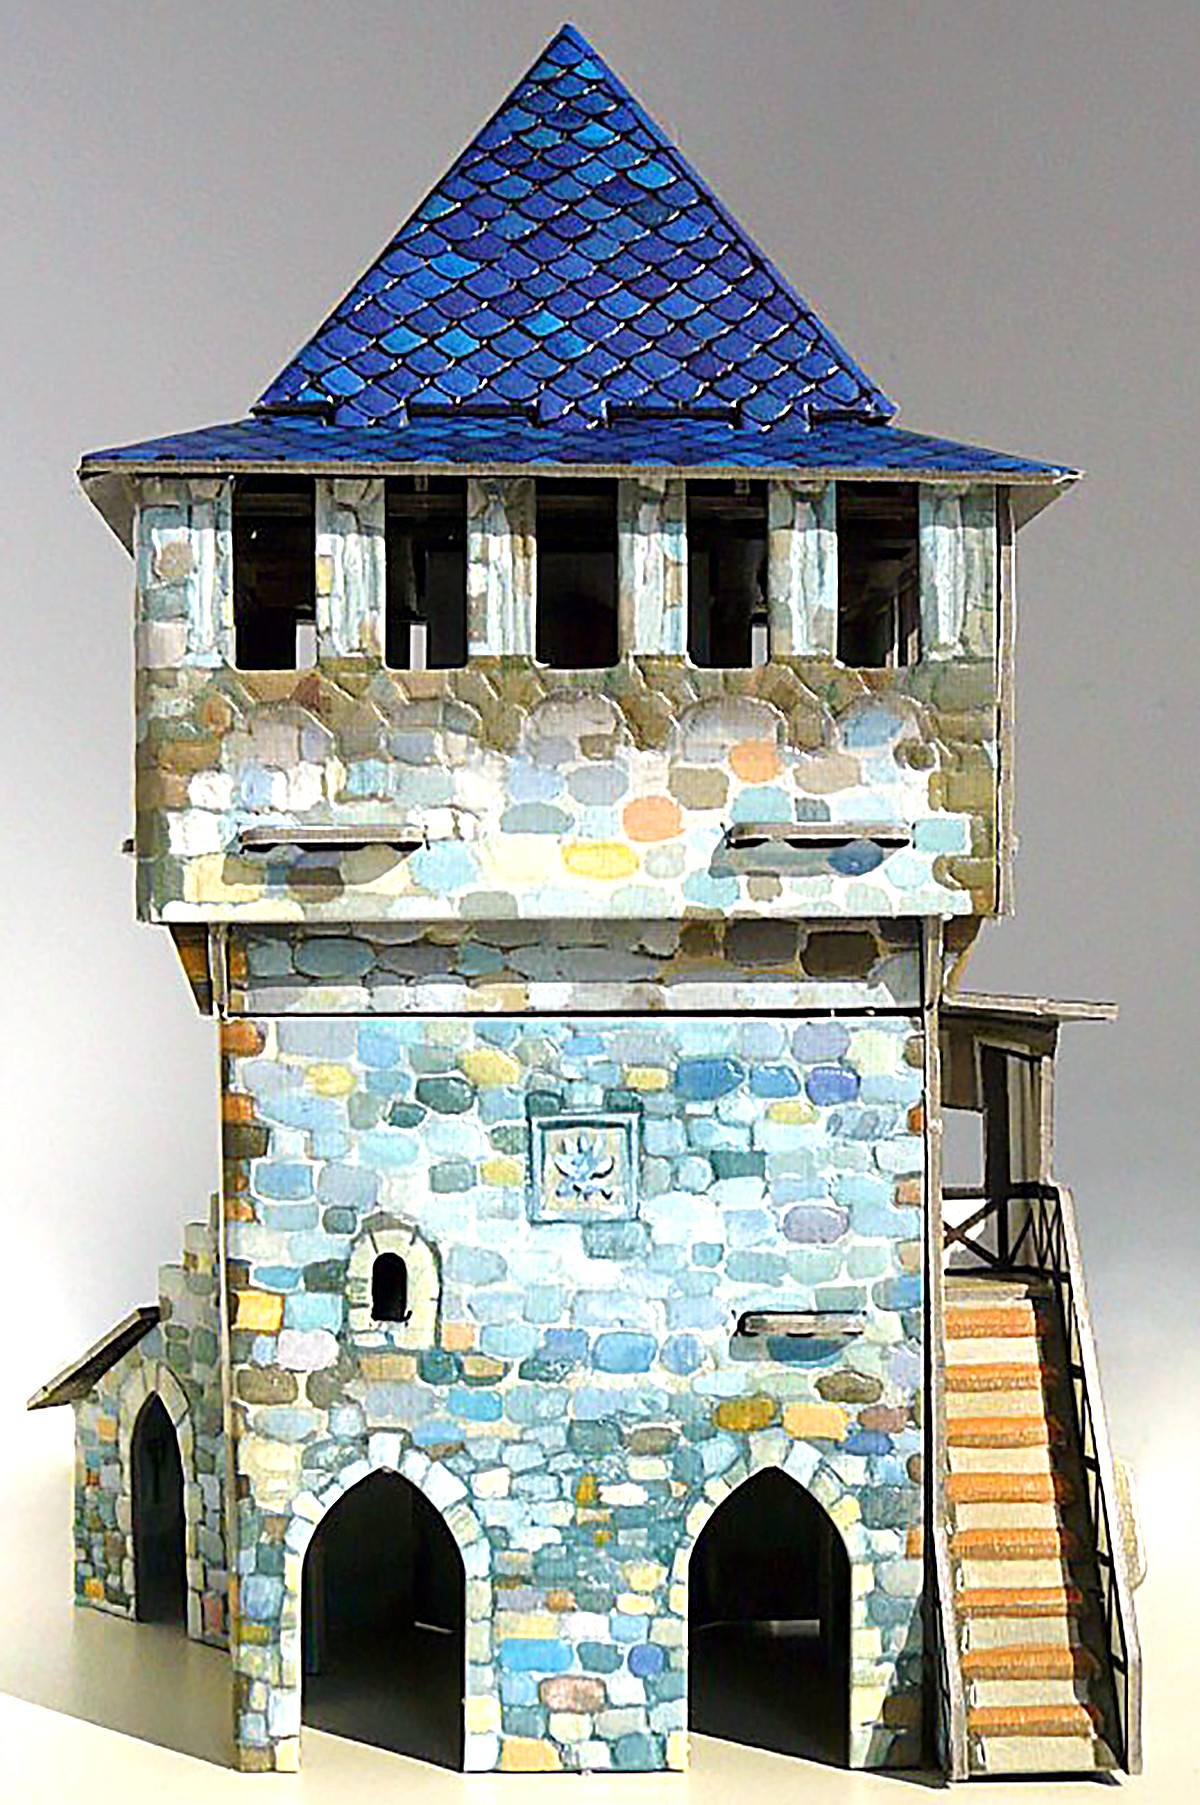 3d Puzzle KARTONMODELLBAU Papier Modell Geschenk Idee Spielzeug Oberer Turm TOP TOWER